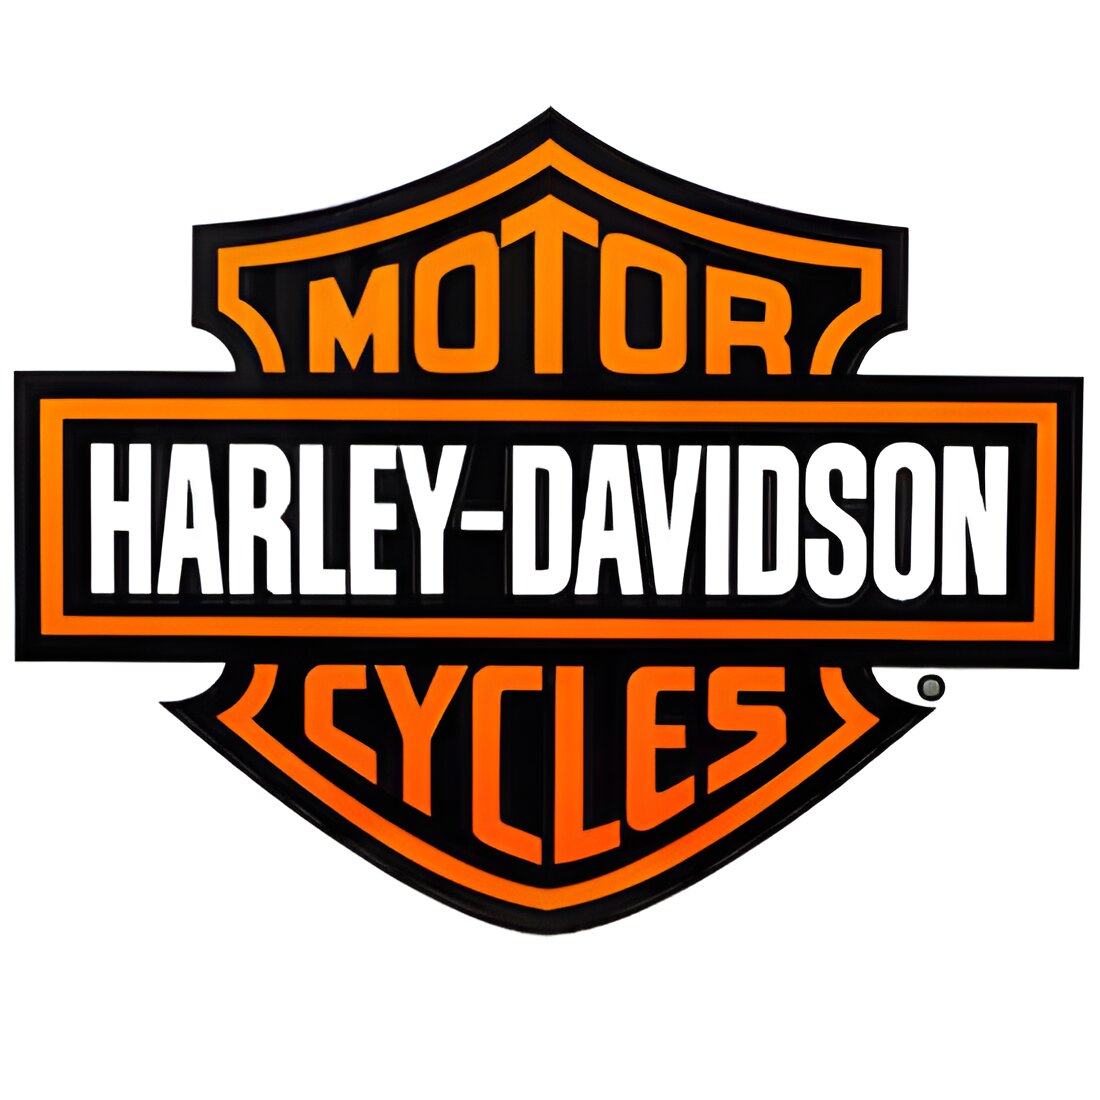 Free Harley-Davidson Sticker